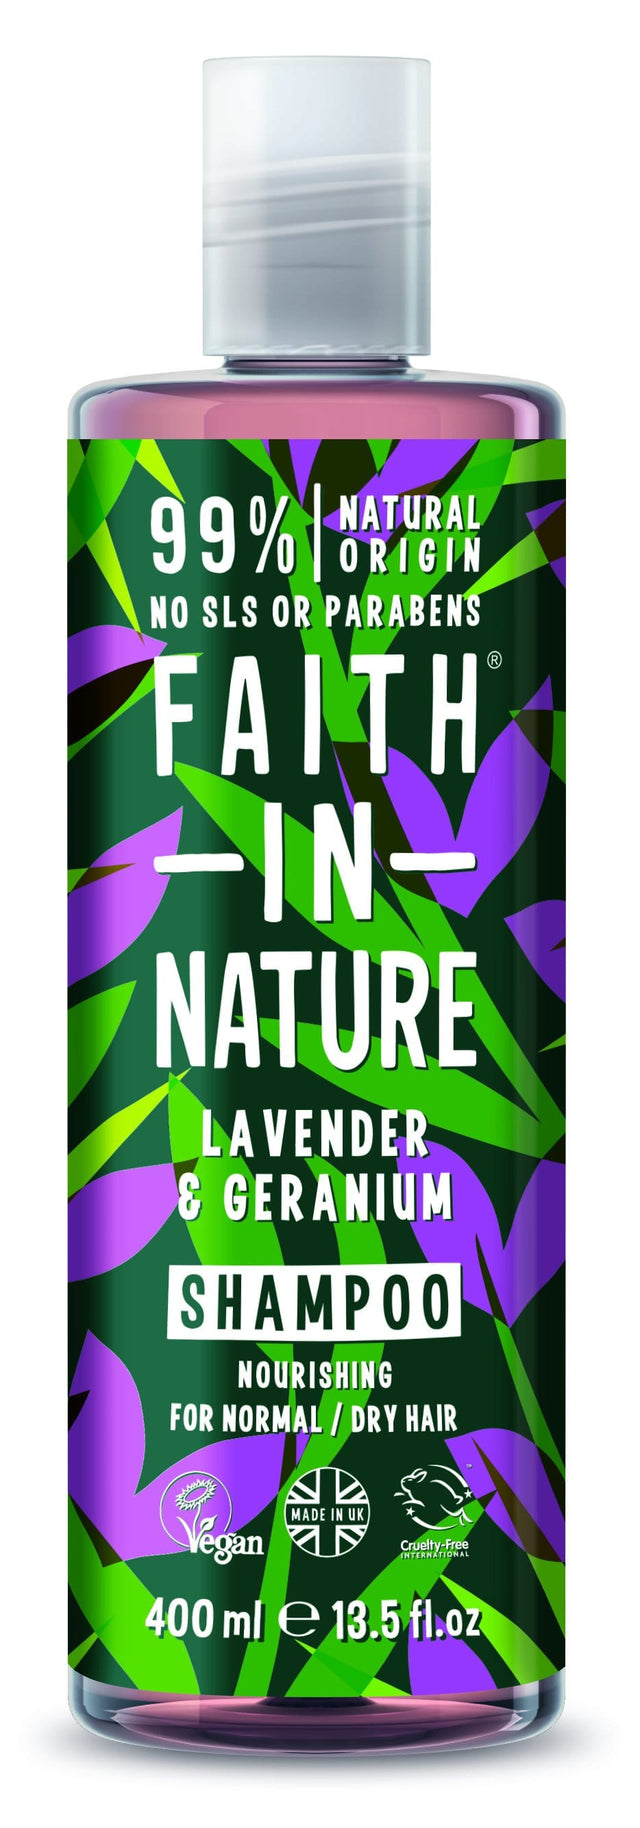 Faith in Nature Lavender & Geranium Shampoo, 400ml